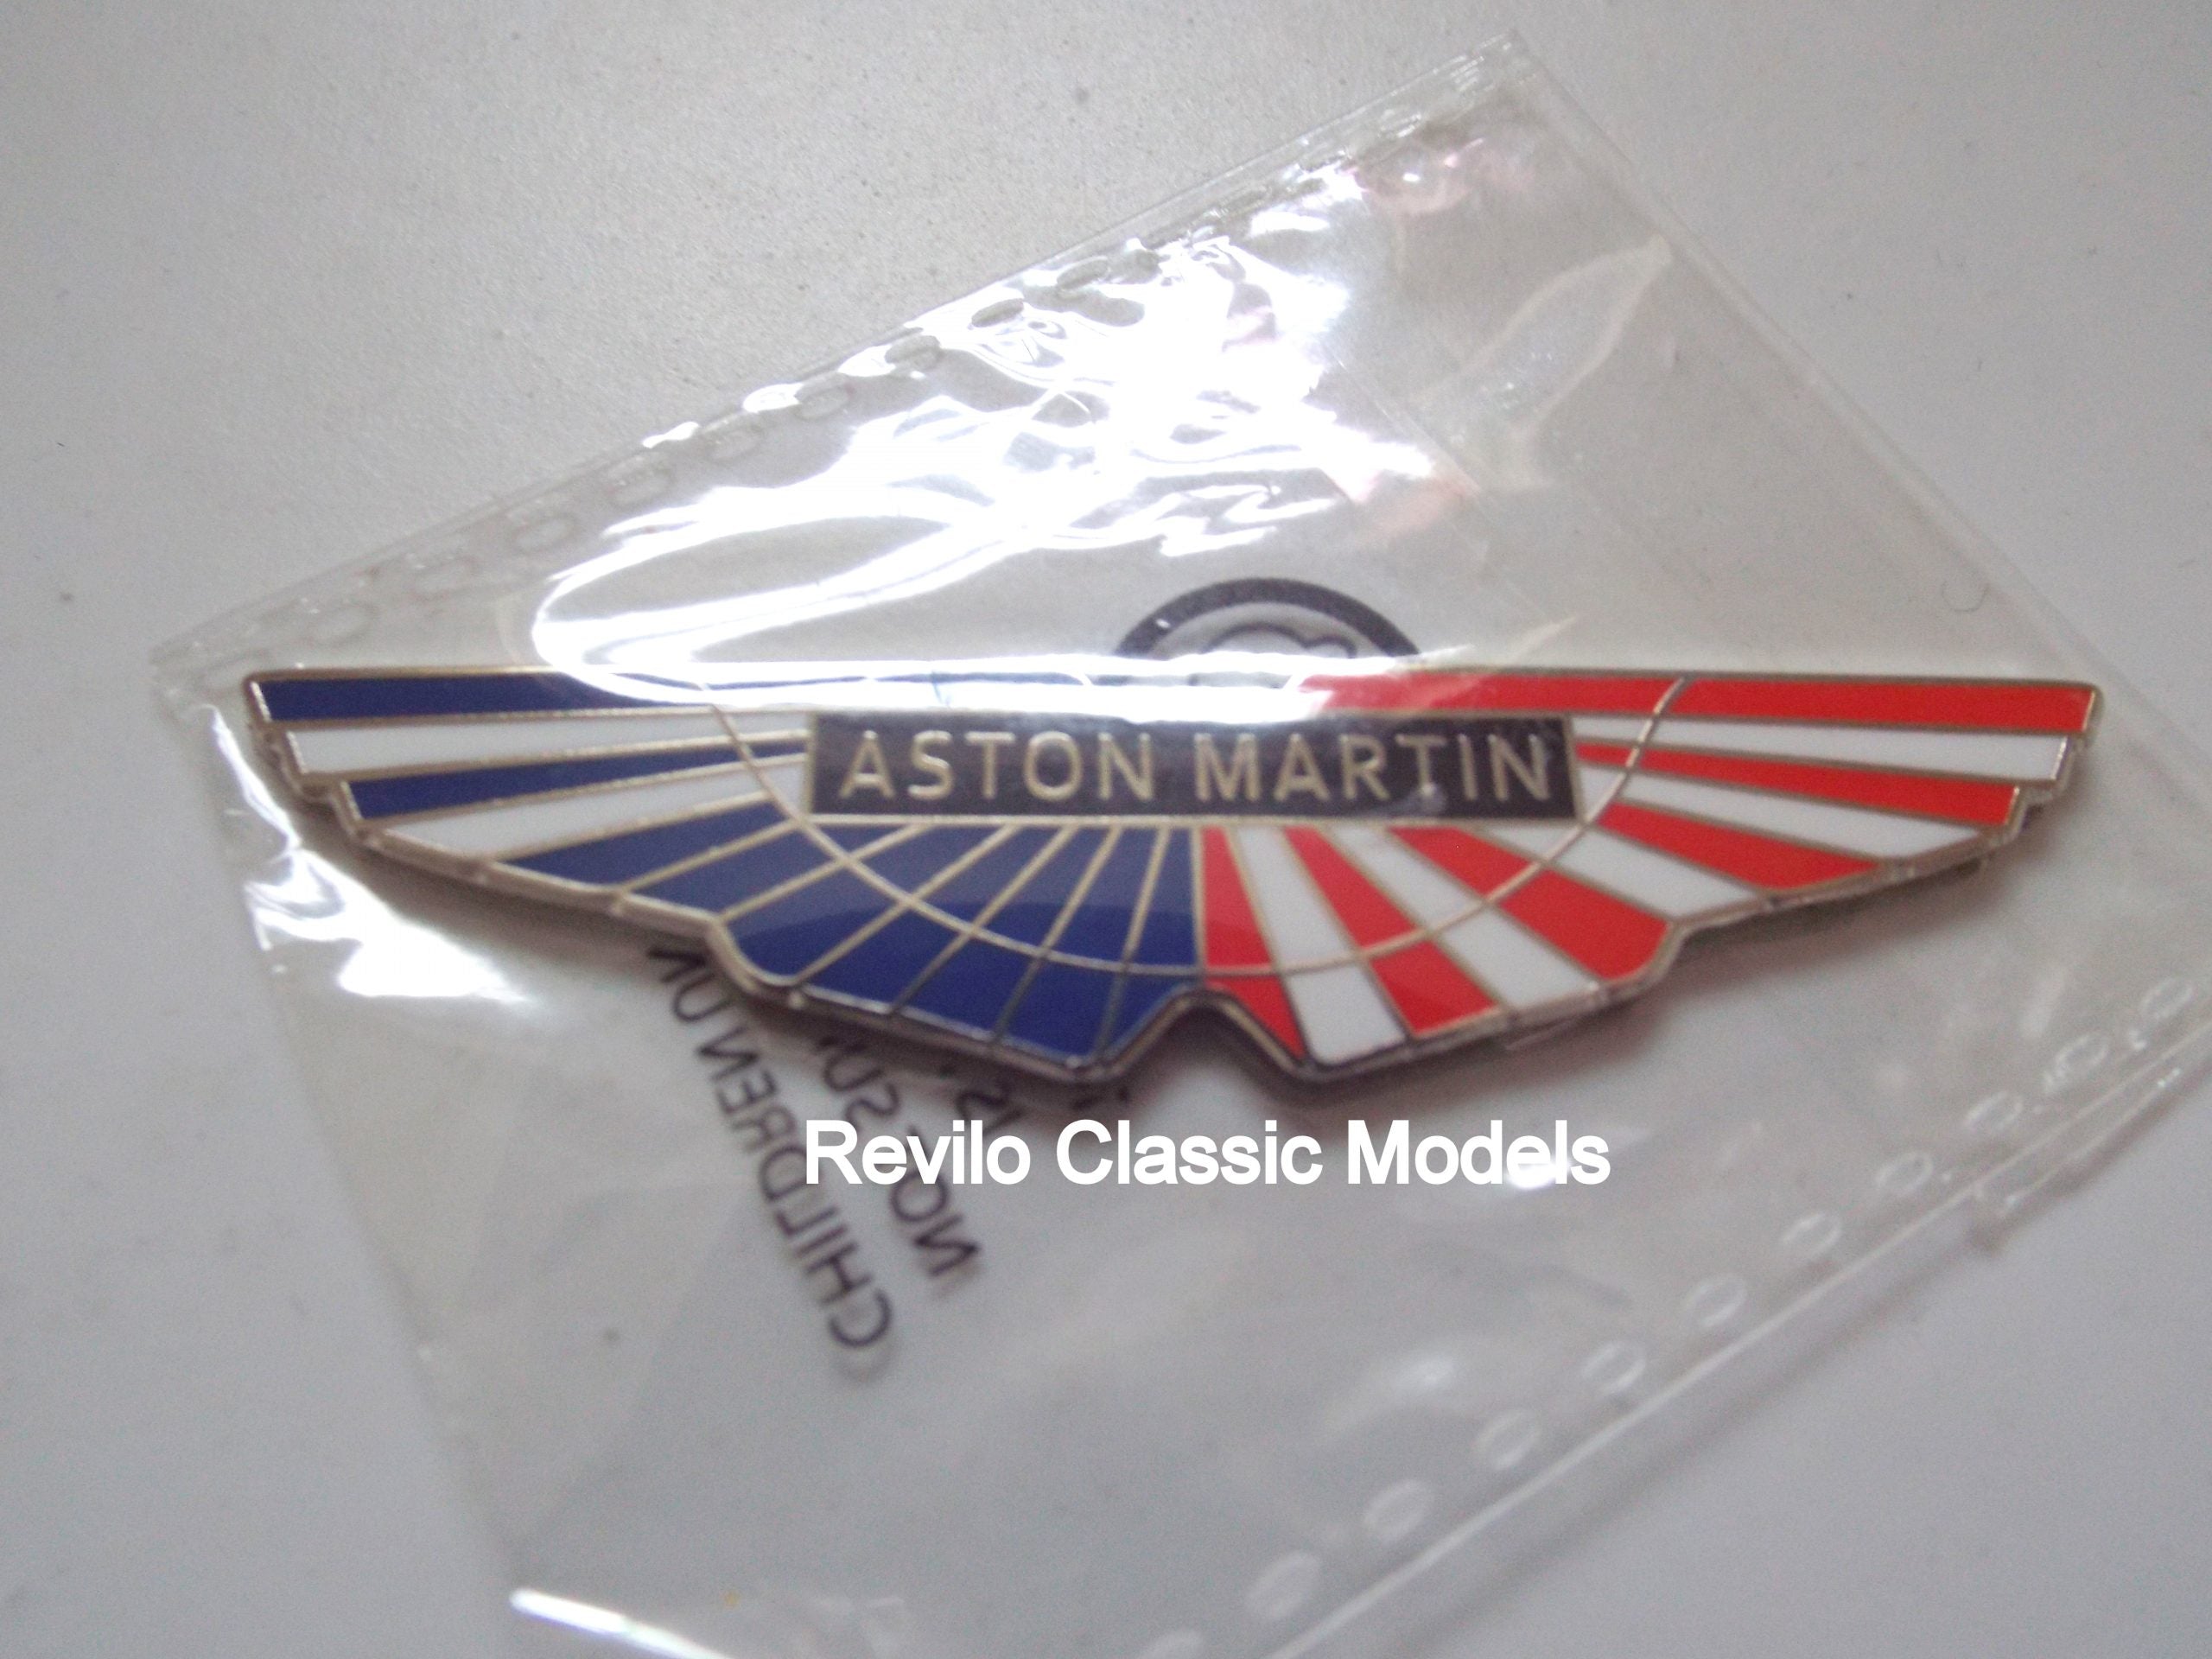 Aston Martin commemorative badges